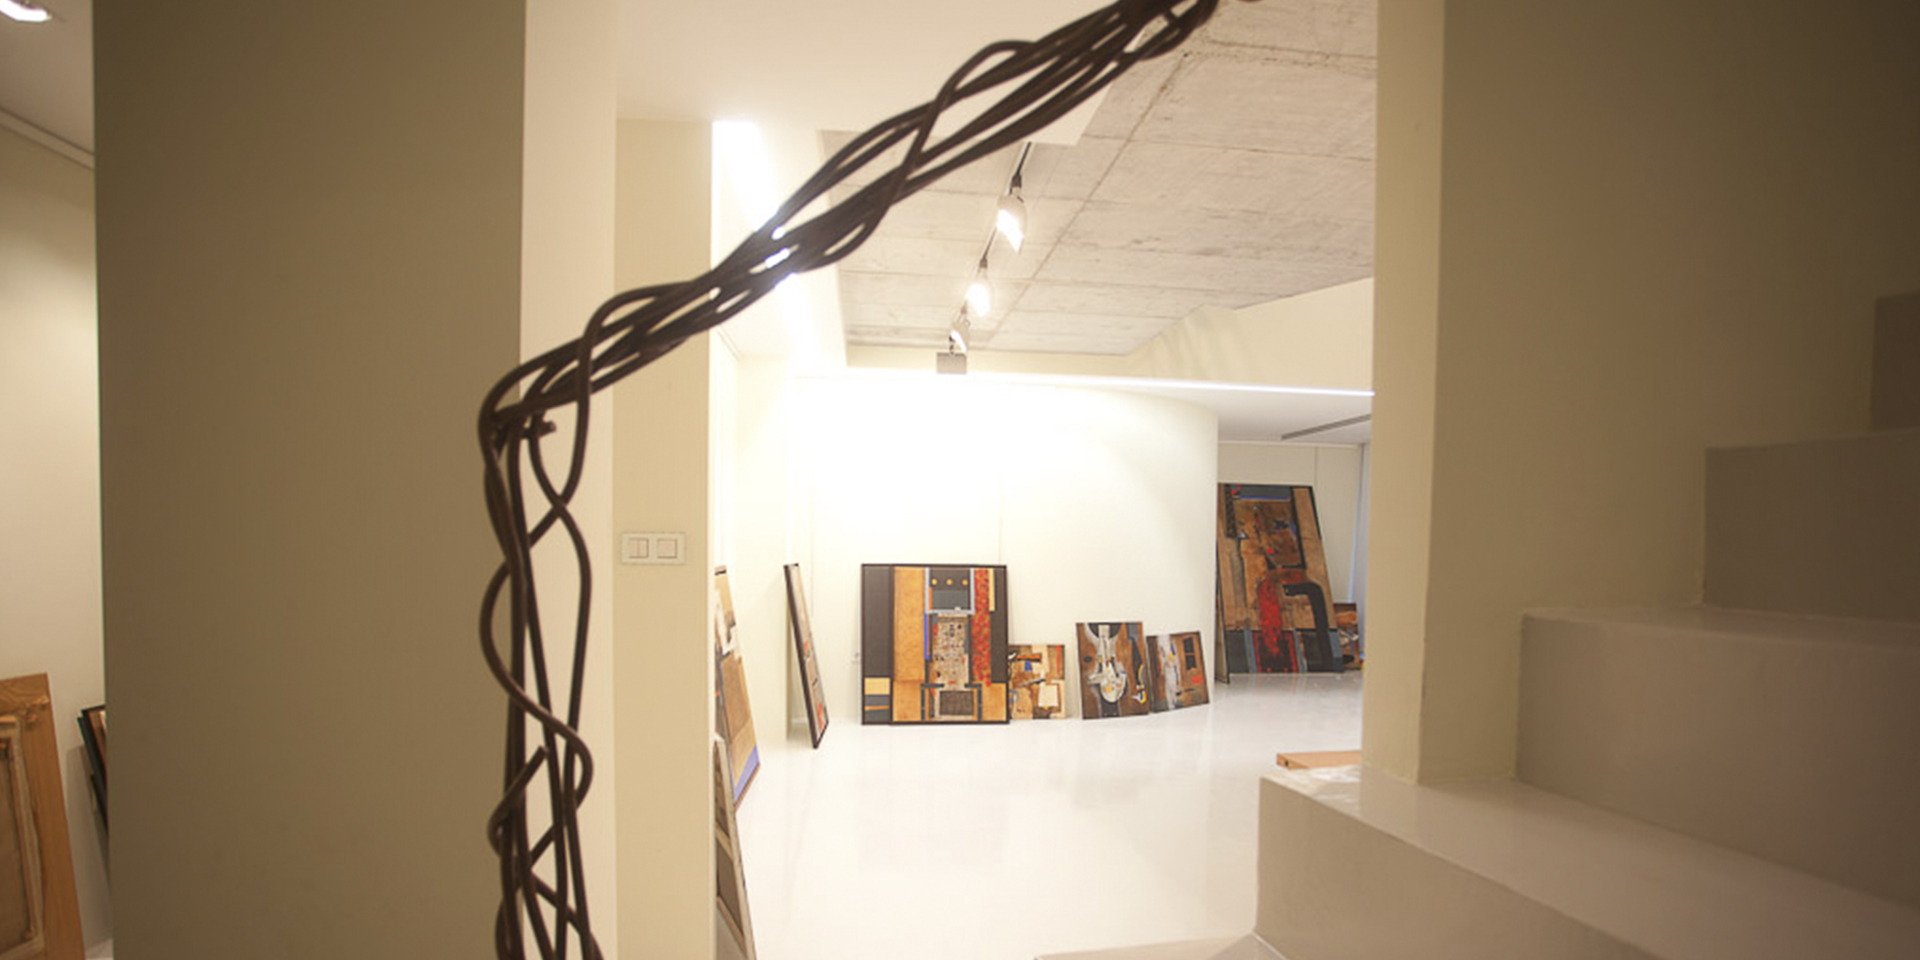 Galería de Arte Contemporánea en A Coruña